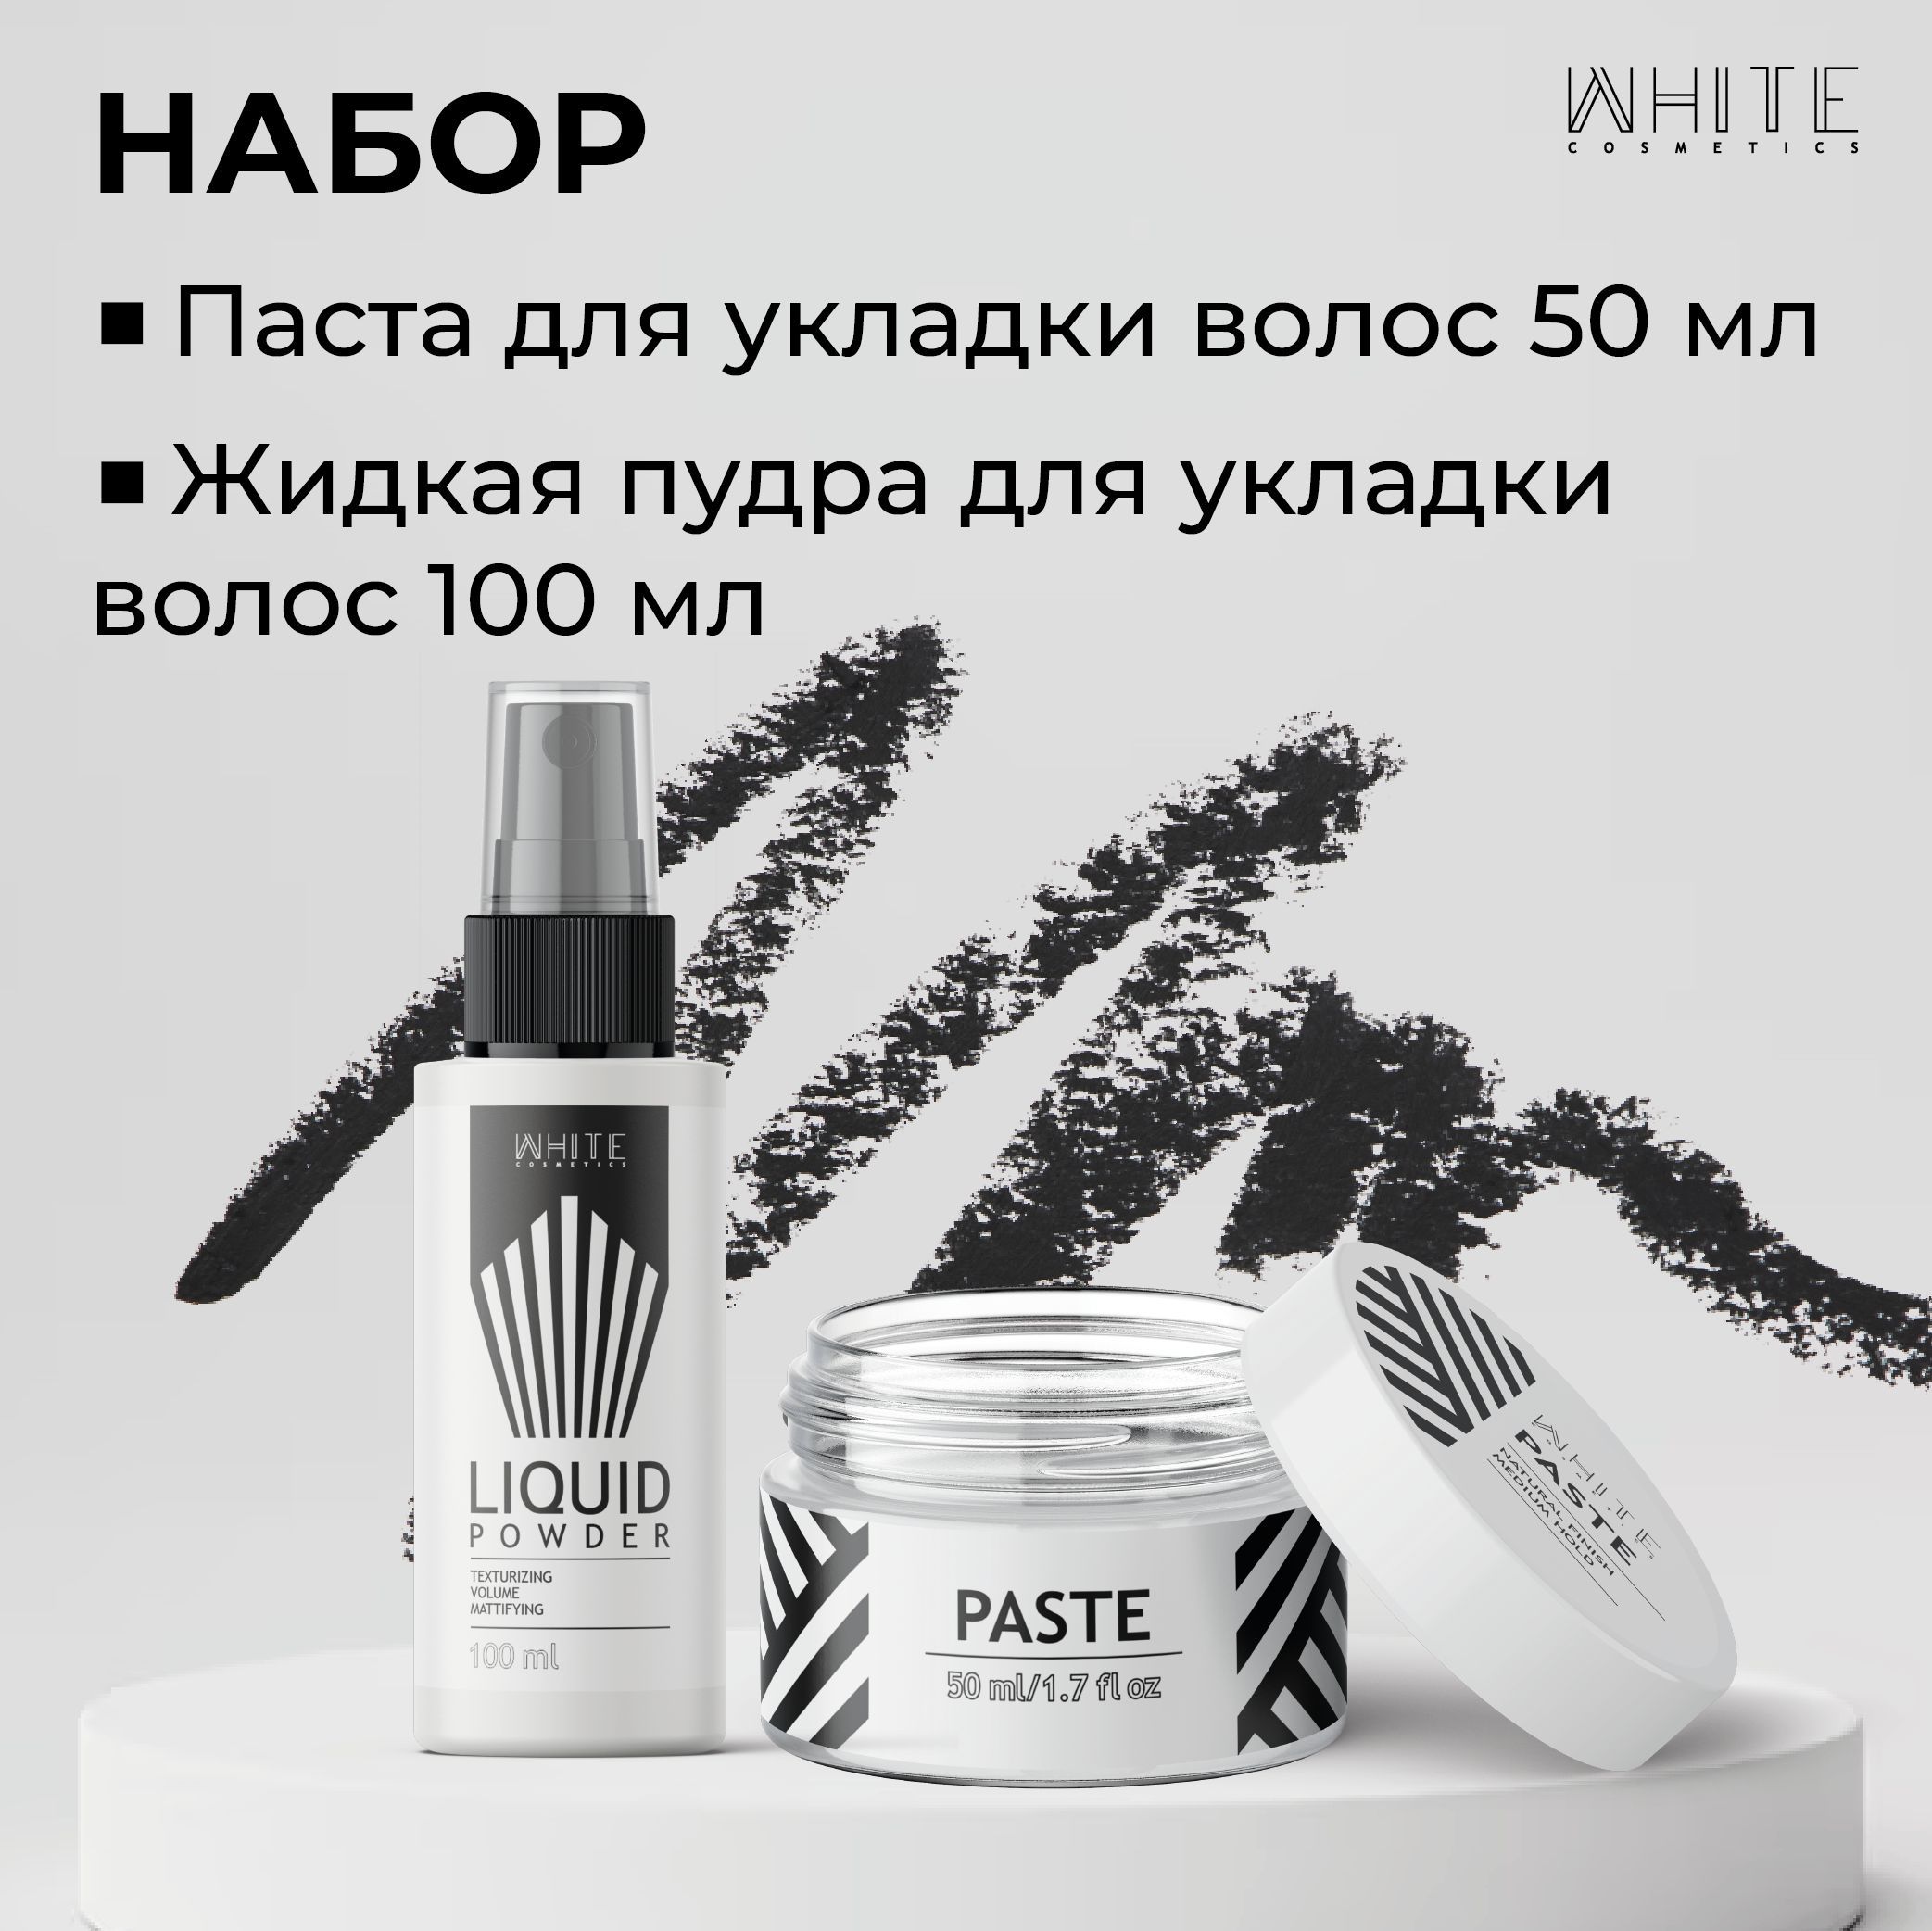 Набор для укладки волос White Cosmetics Паста 50мл и Пудра жидкая 100мл